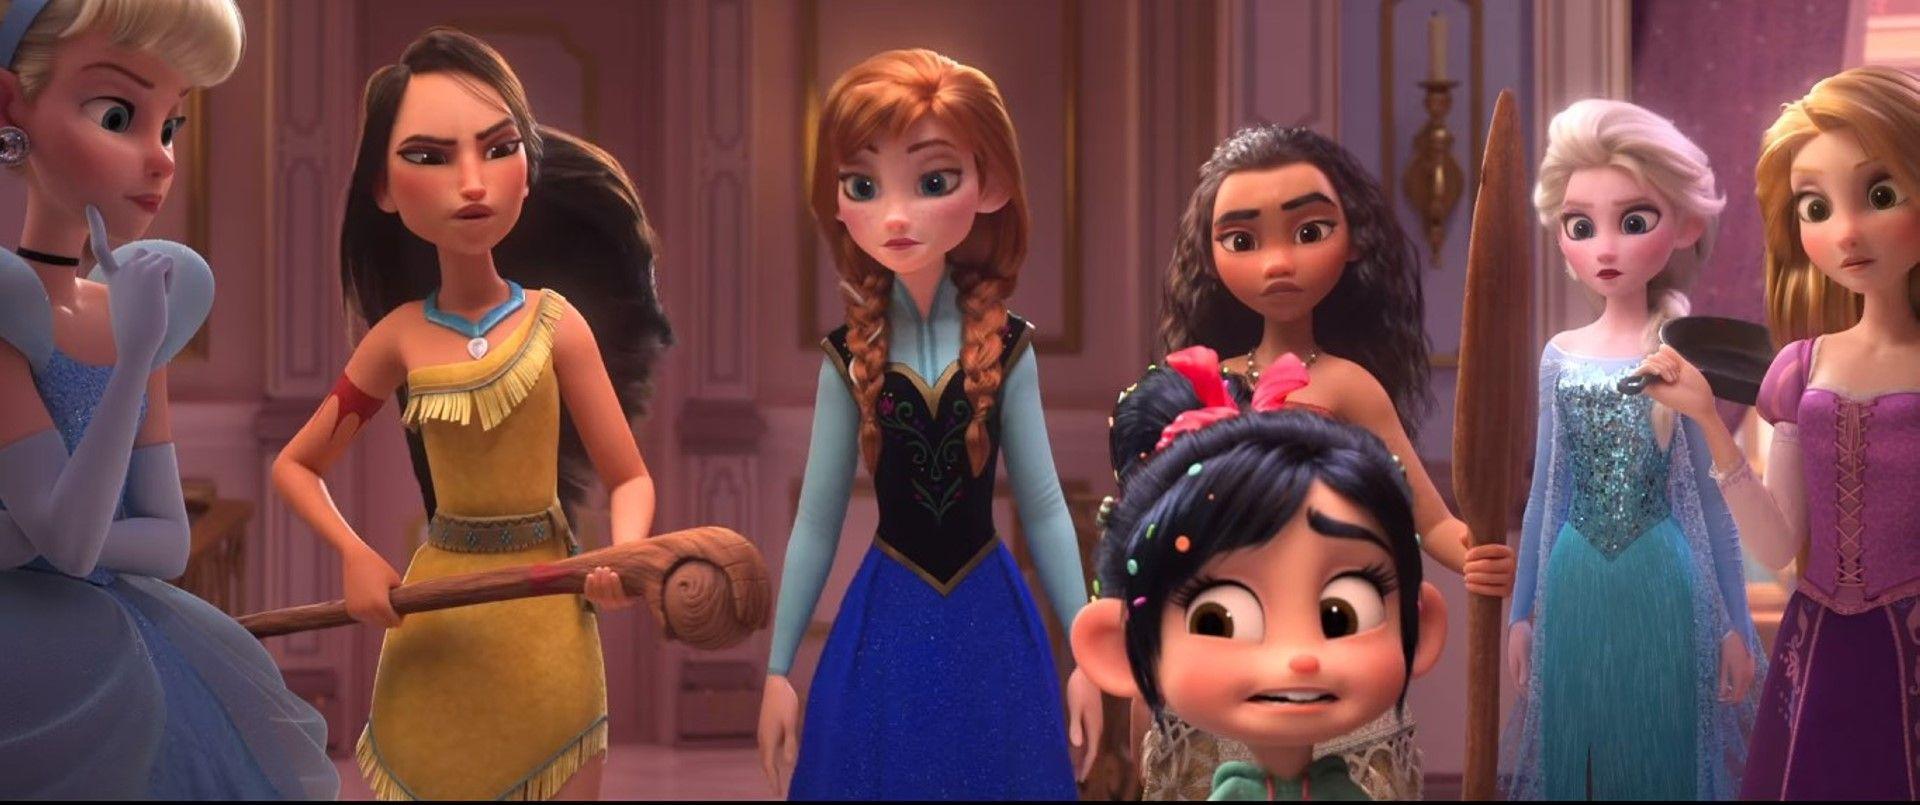 Disney Princess image The Disney Princesses in Ralph Breaks